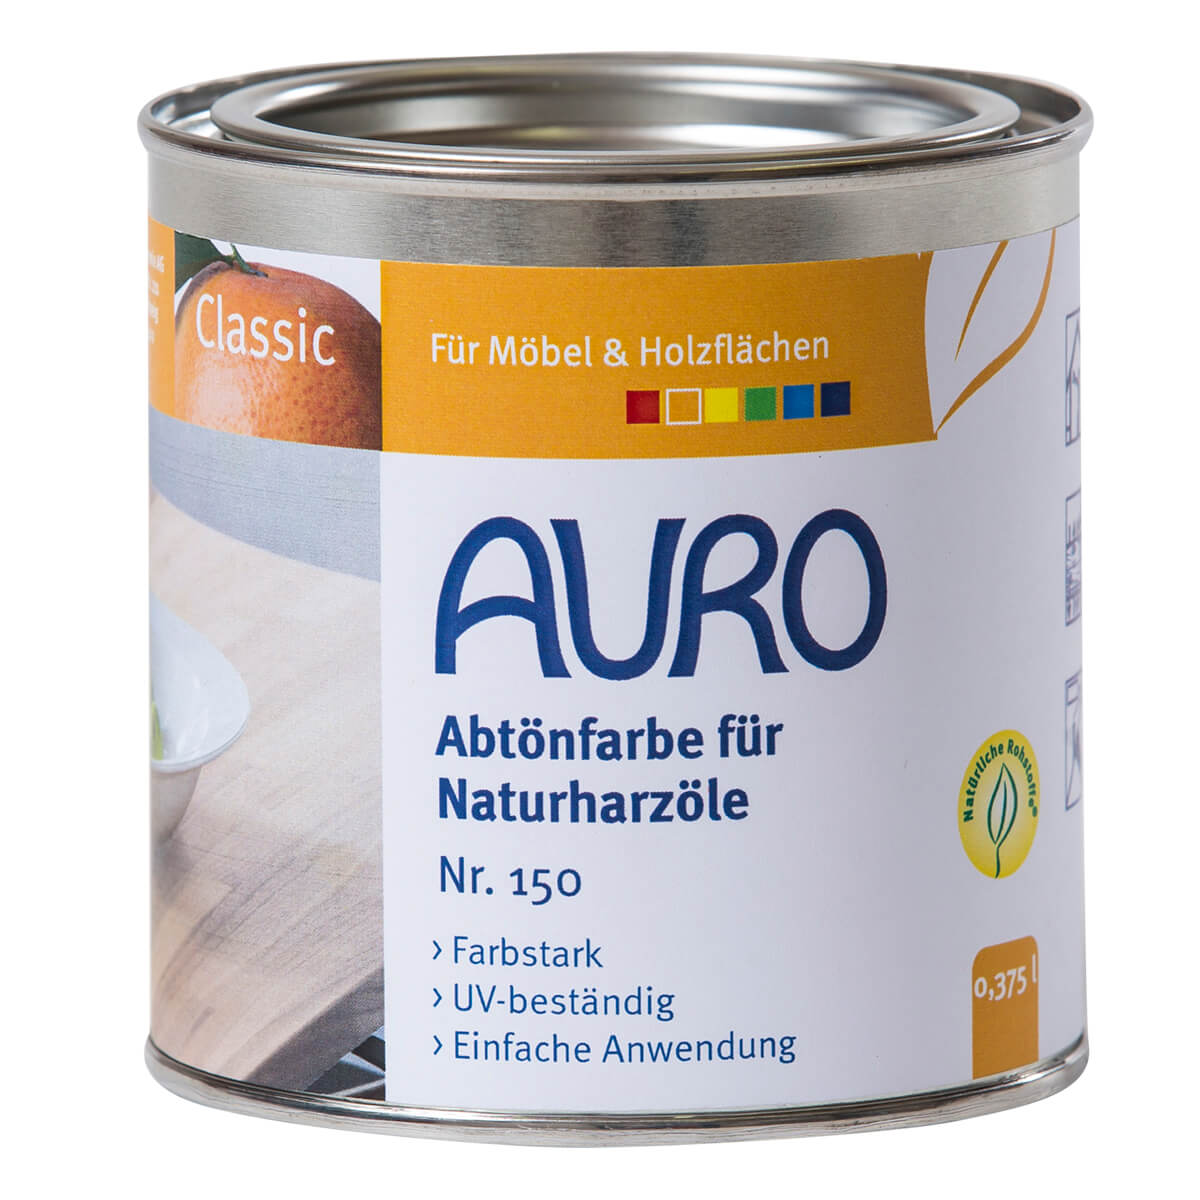 AURO Abtönfarbe für Naturharzöle farbiges Öl Naturfarbe